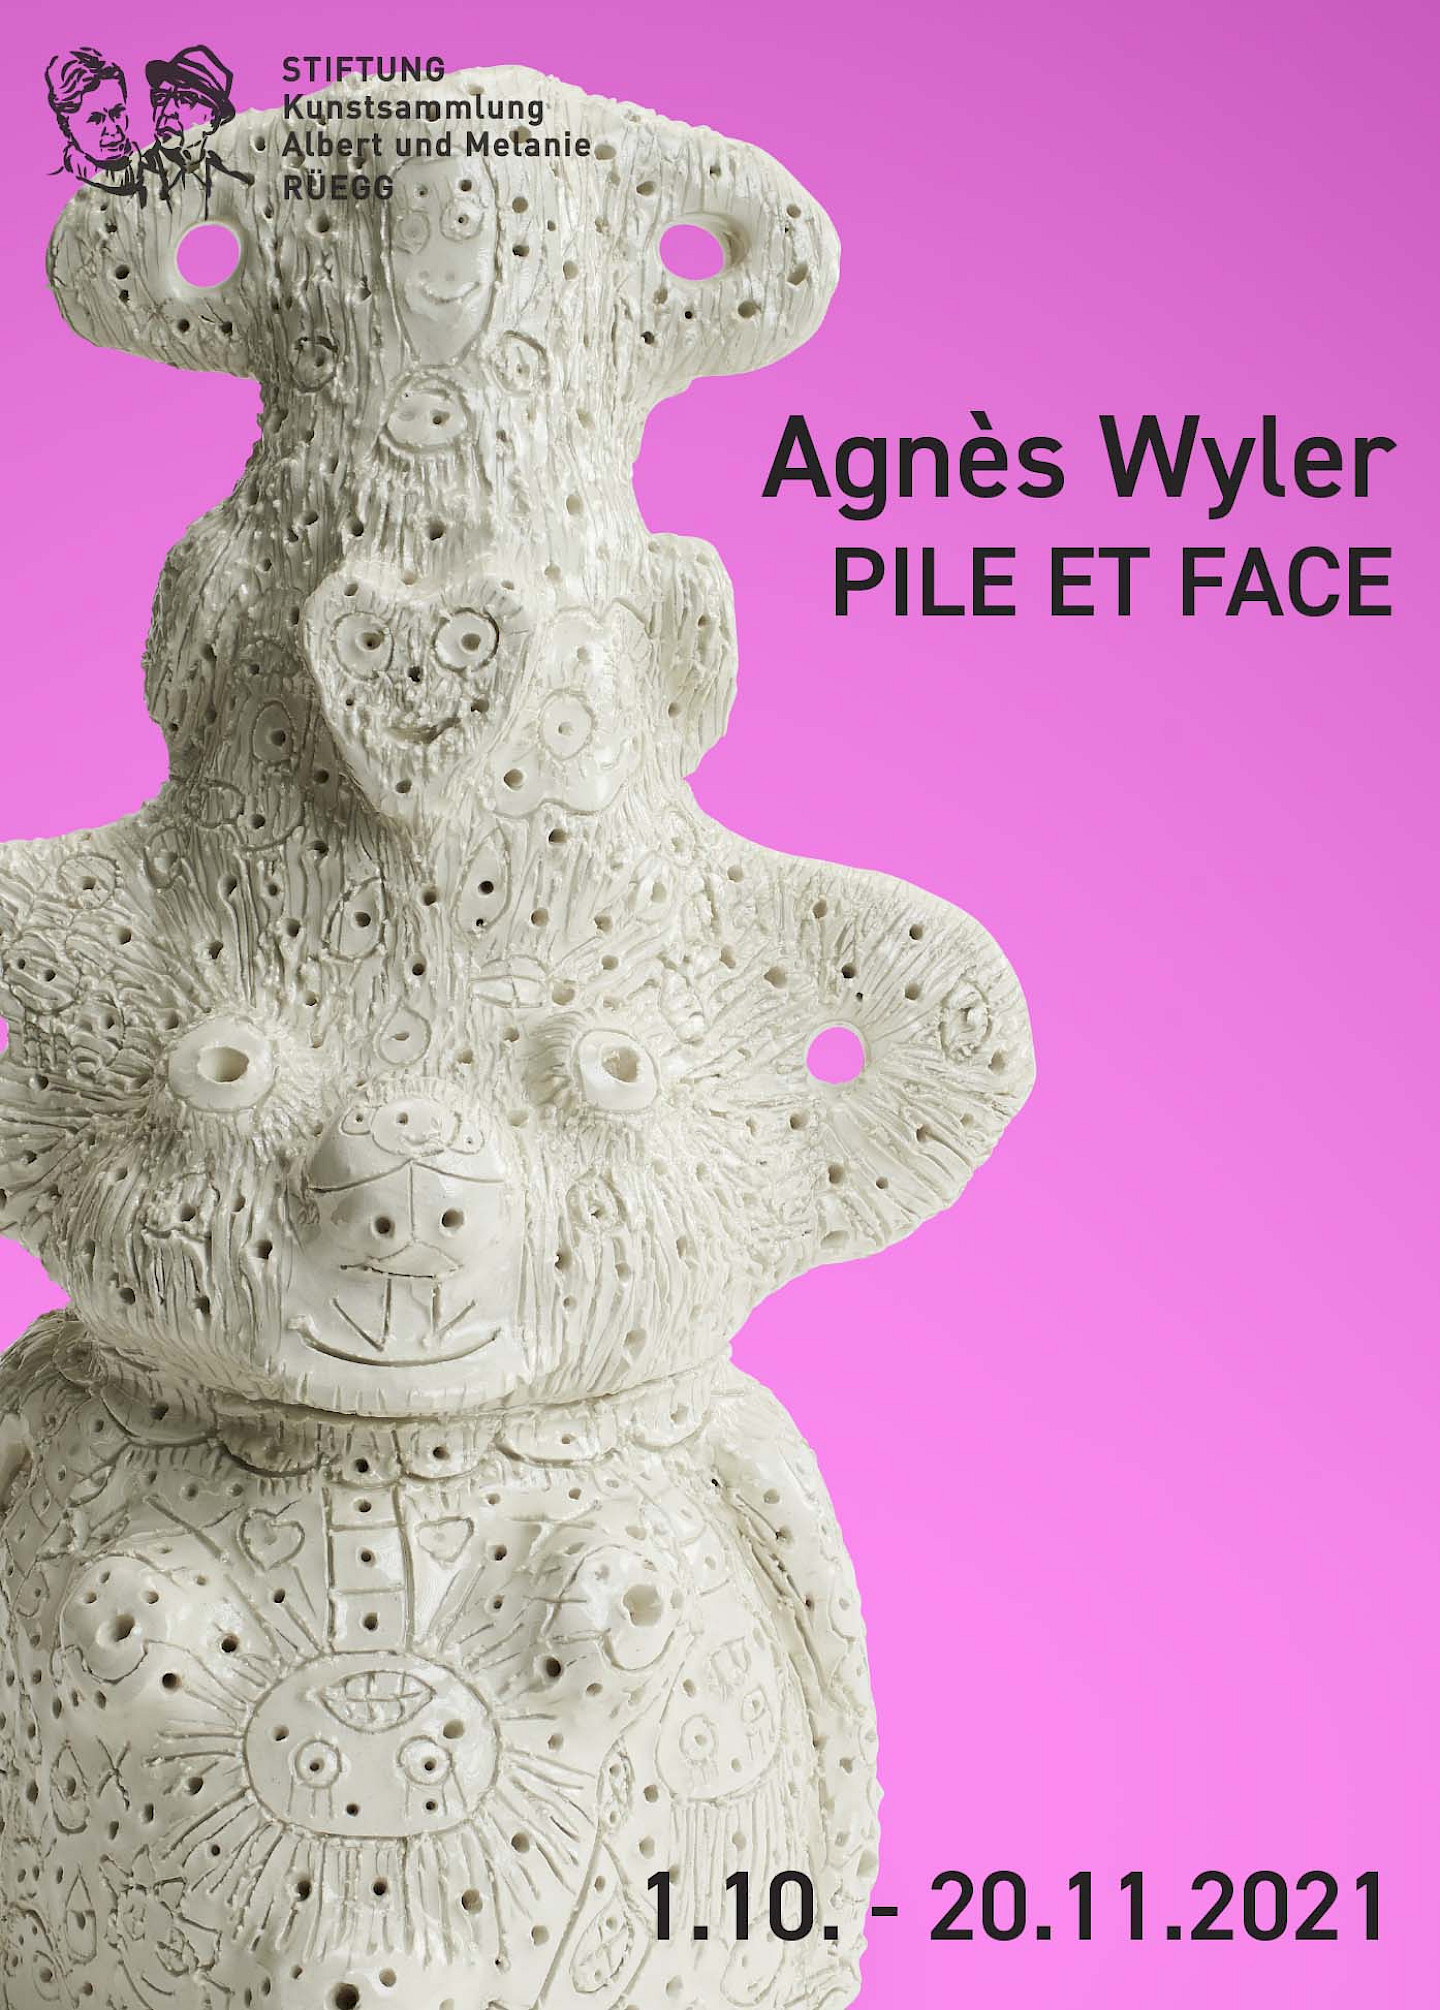 Agnès Wyler